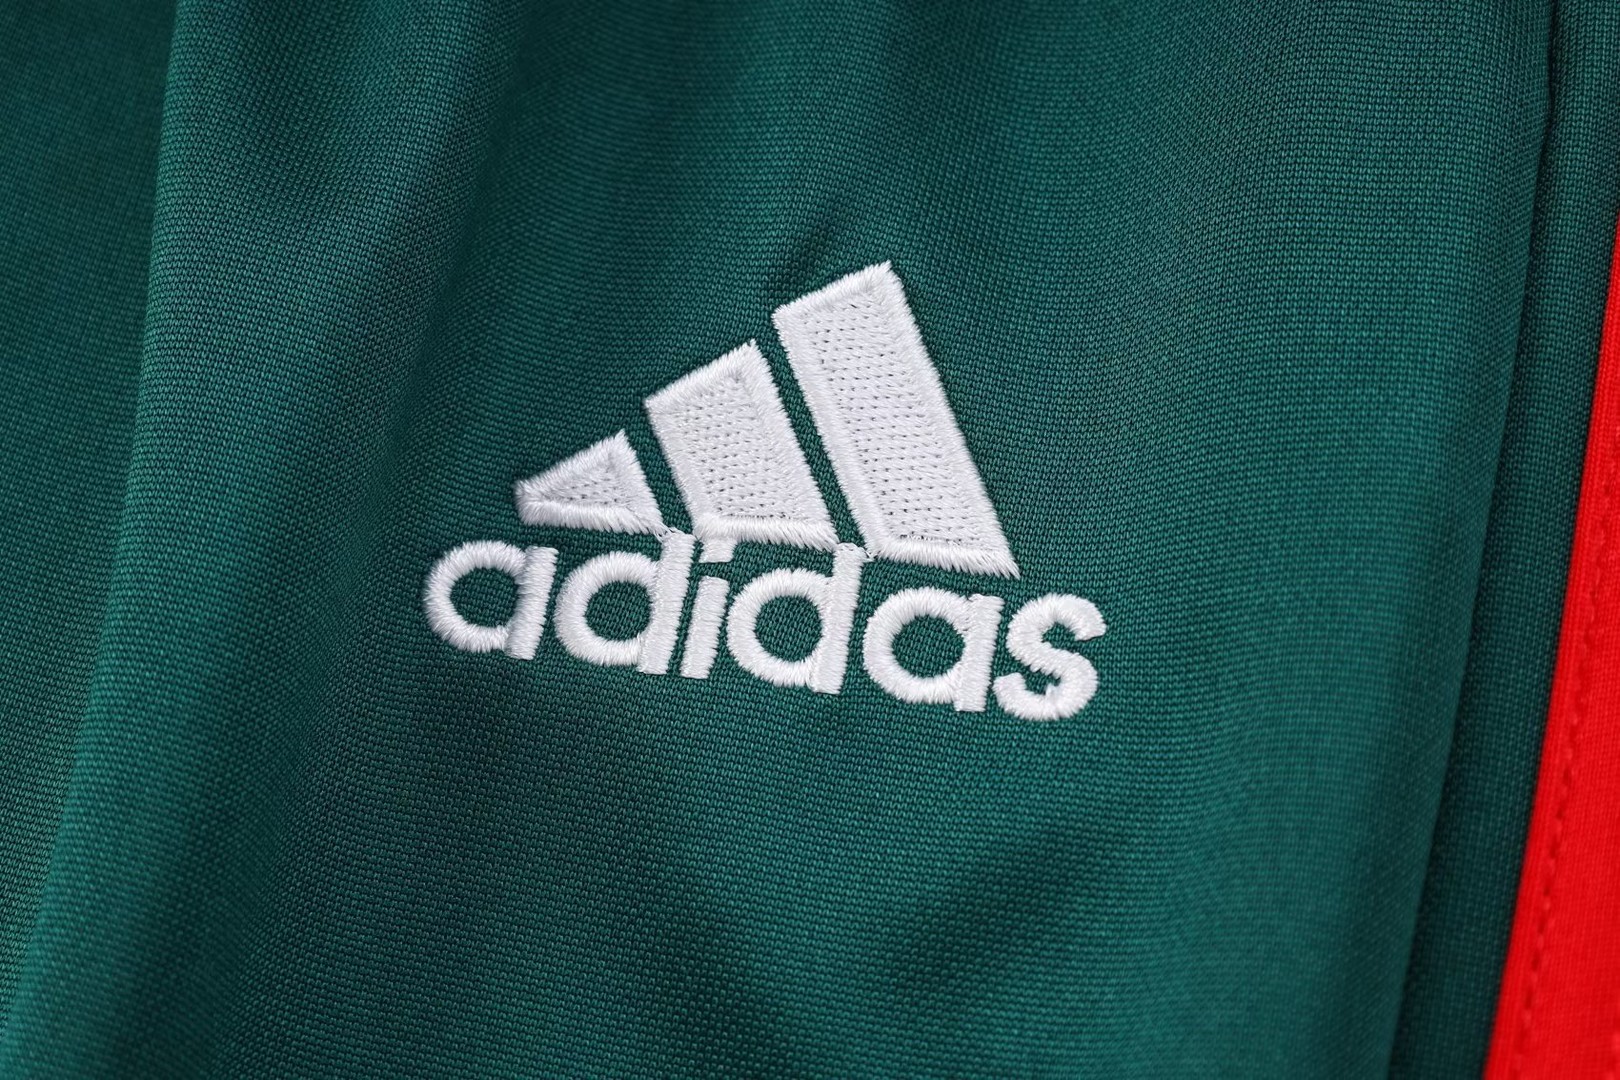 Mexico Soccer Jacket + Pants Replica Green 2022 Mens